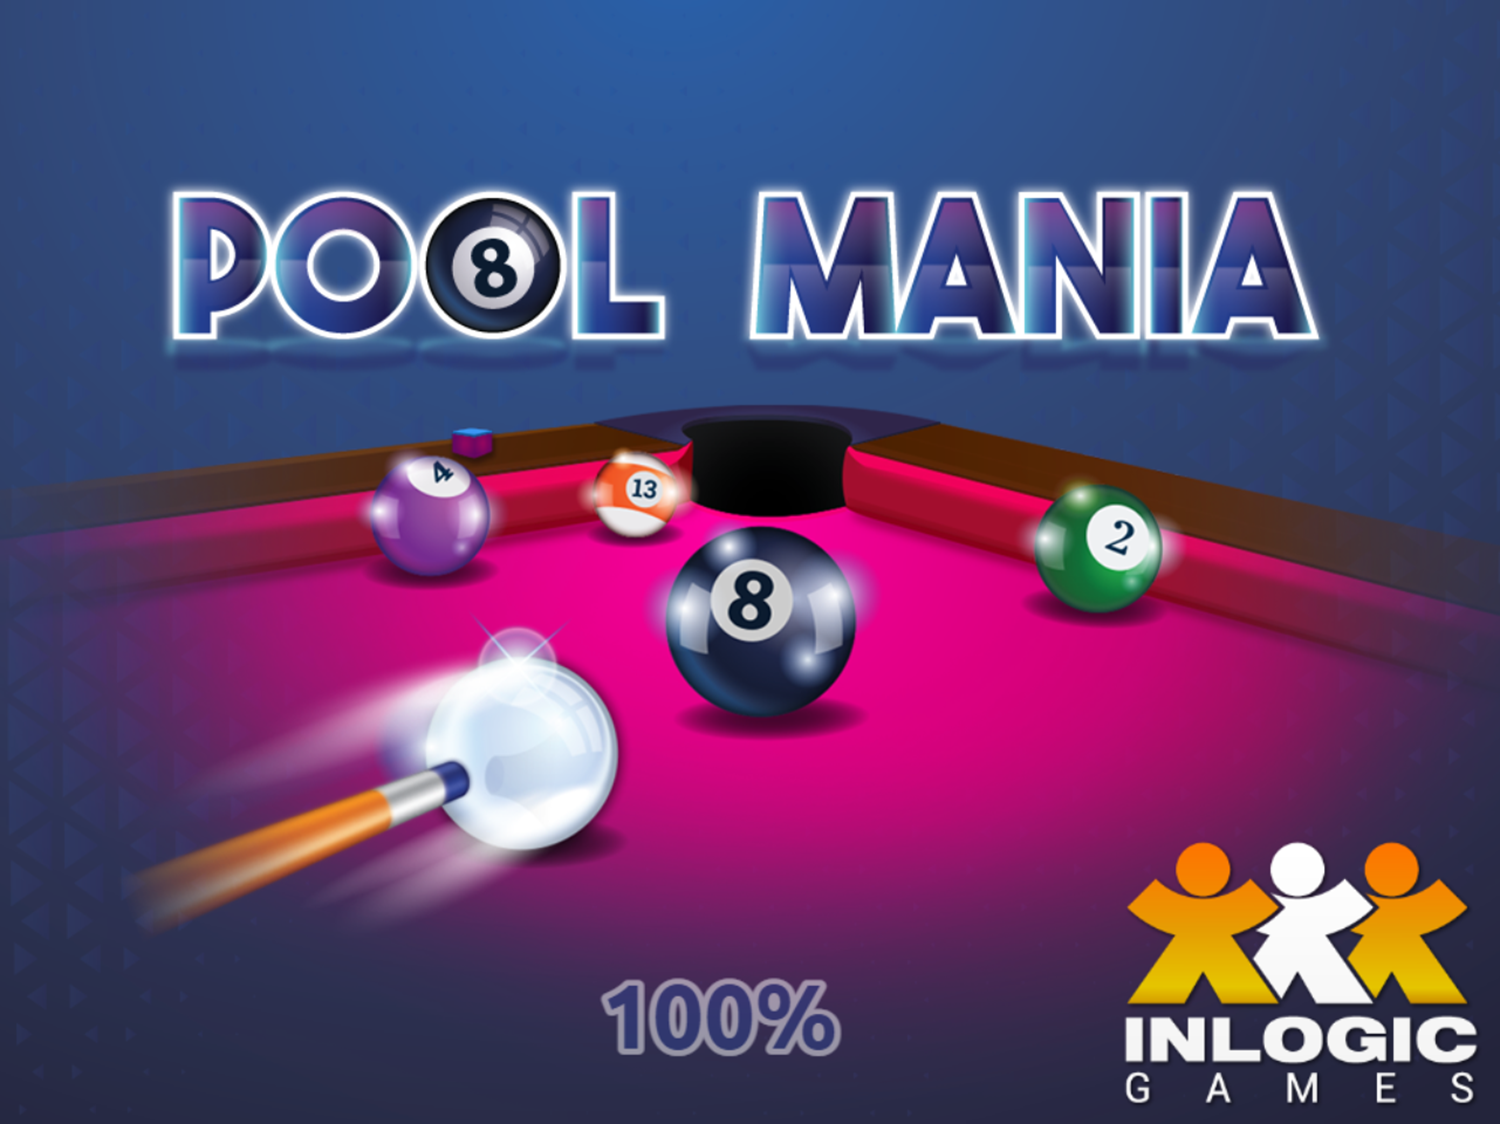 Pool Mania Game Welcome Screen Screenshot.